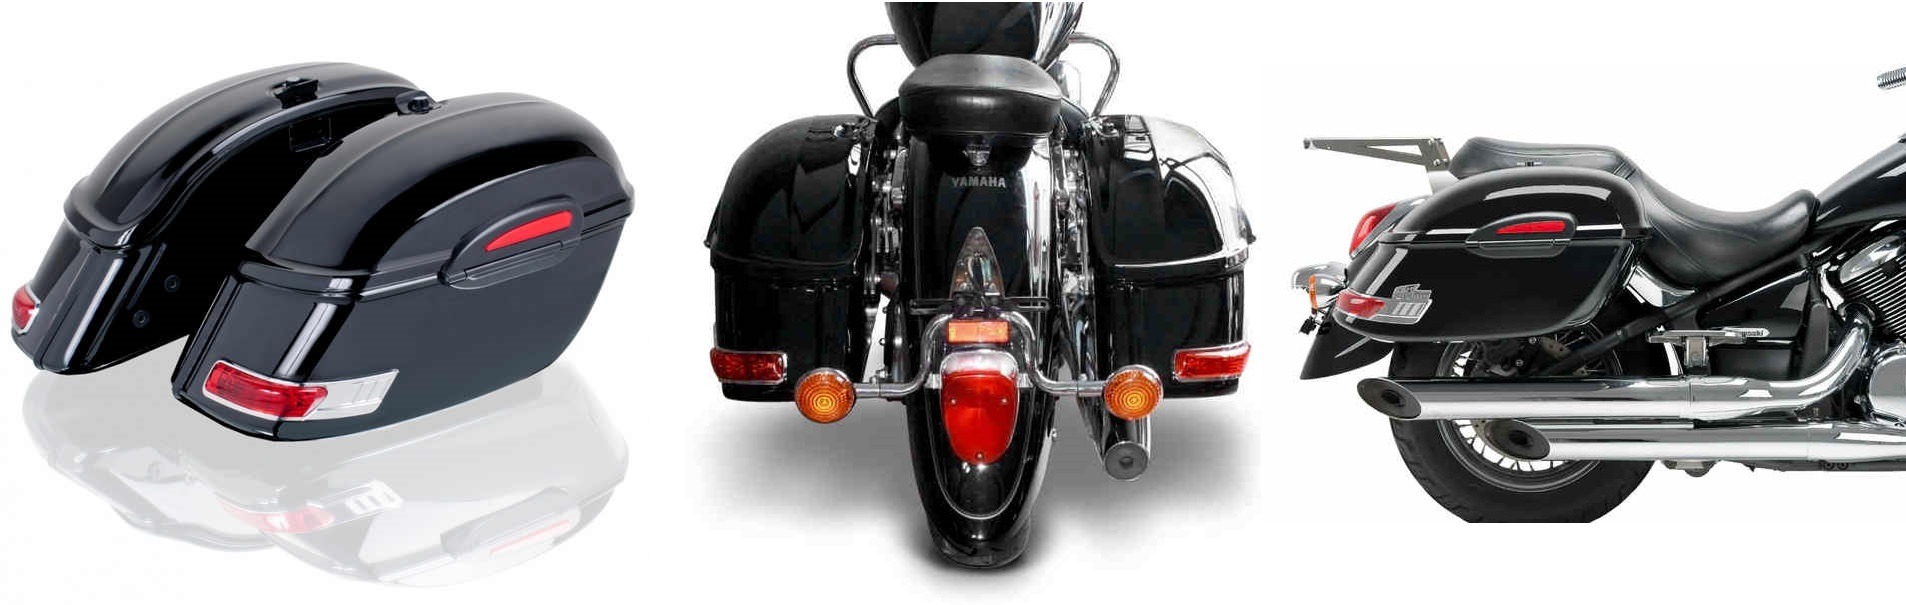 Alforjas rígidas motos custom - SpacioBiker